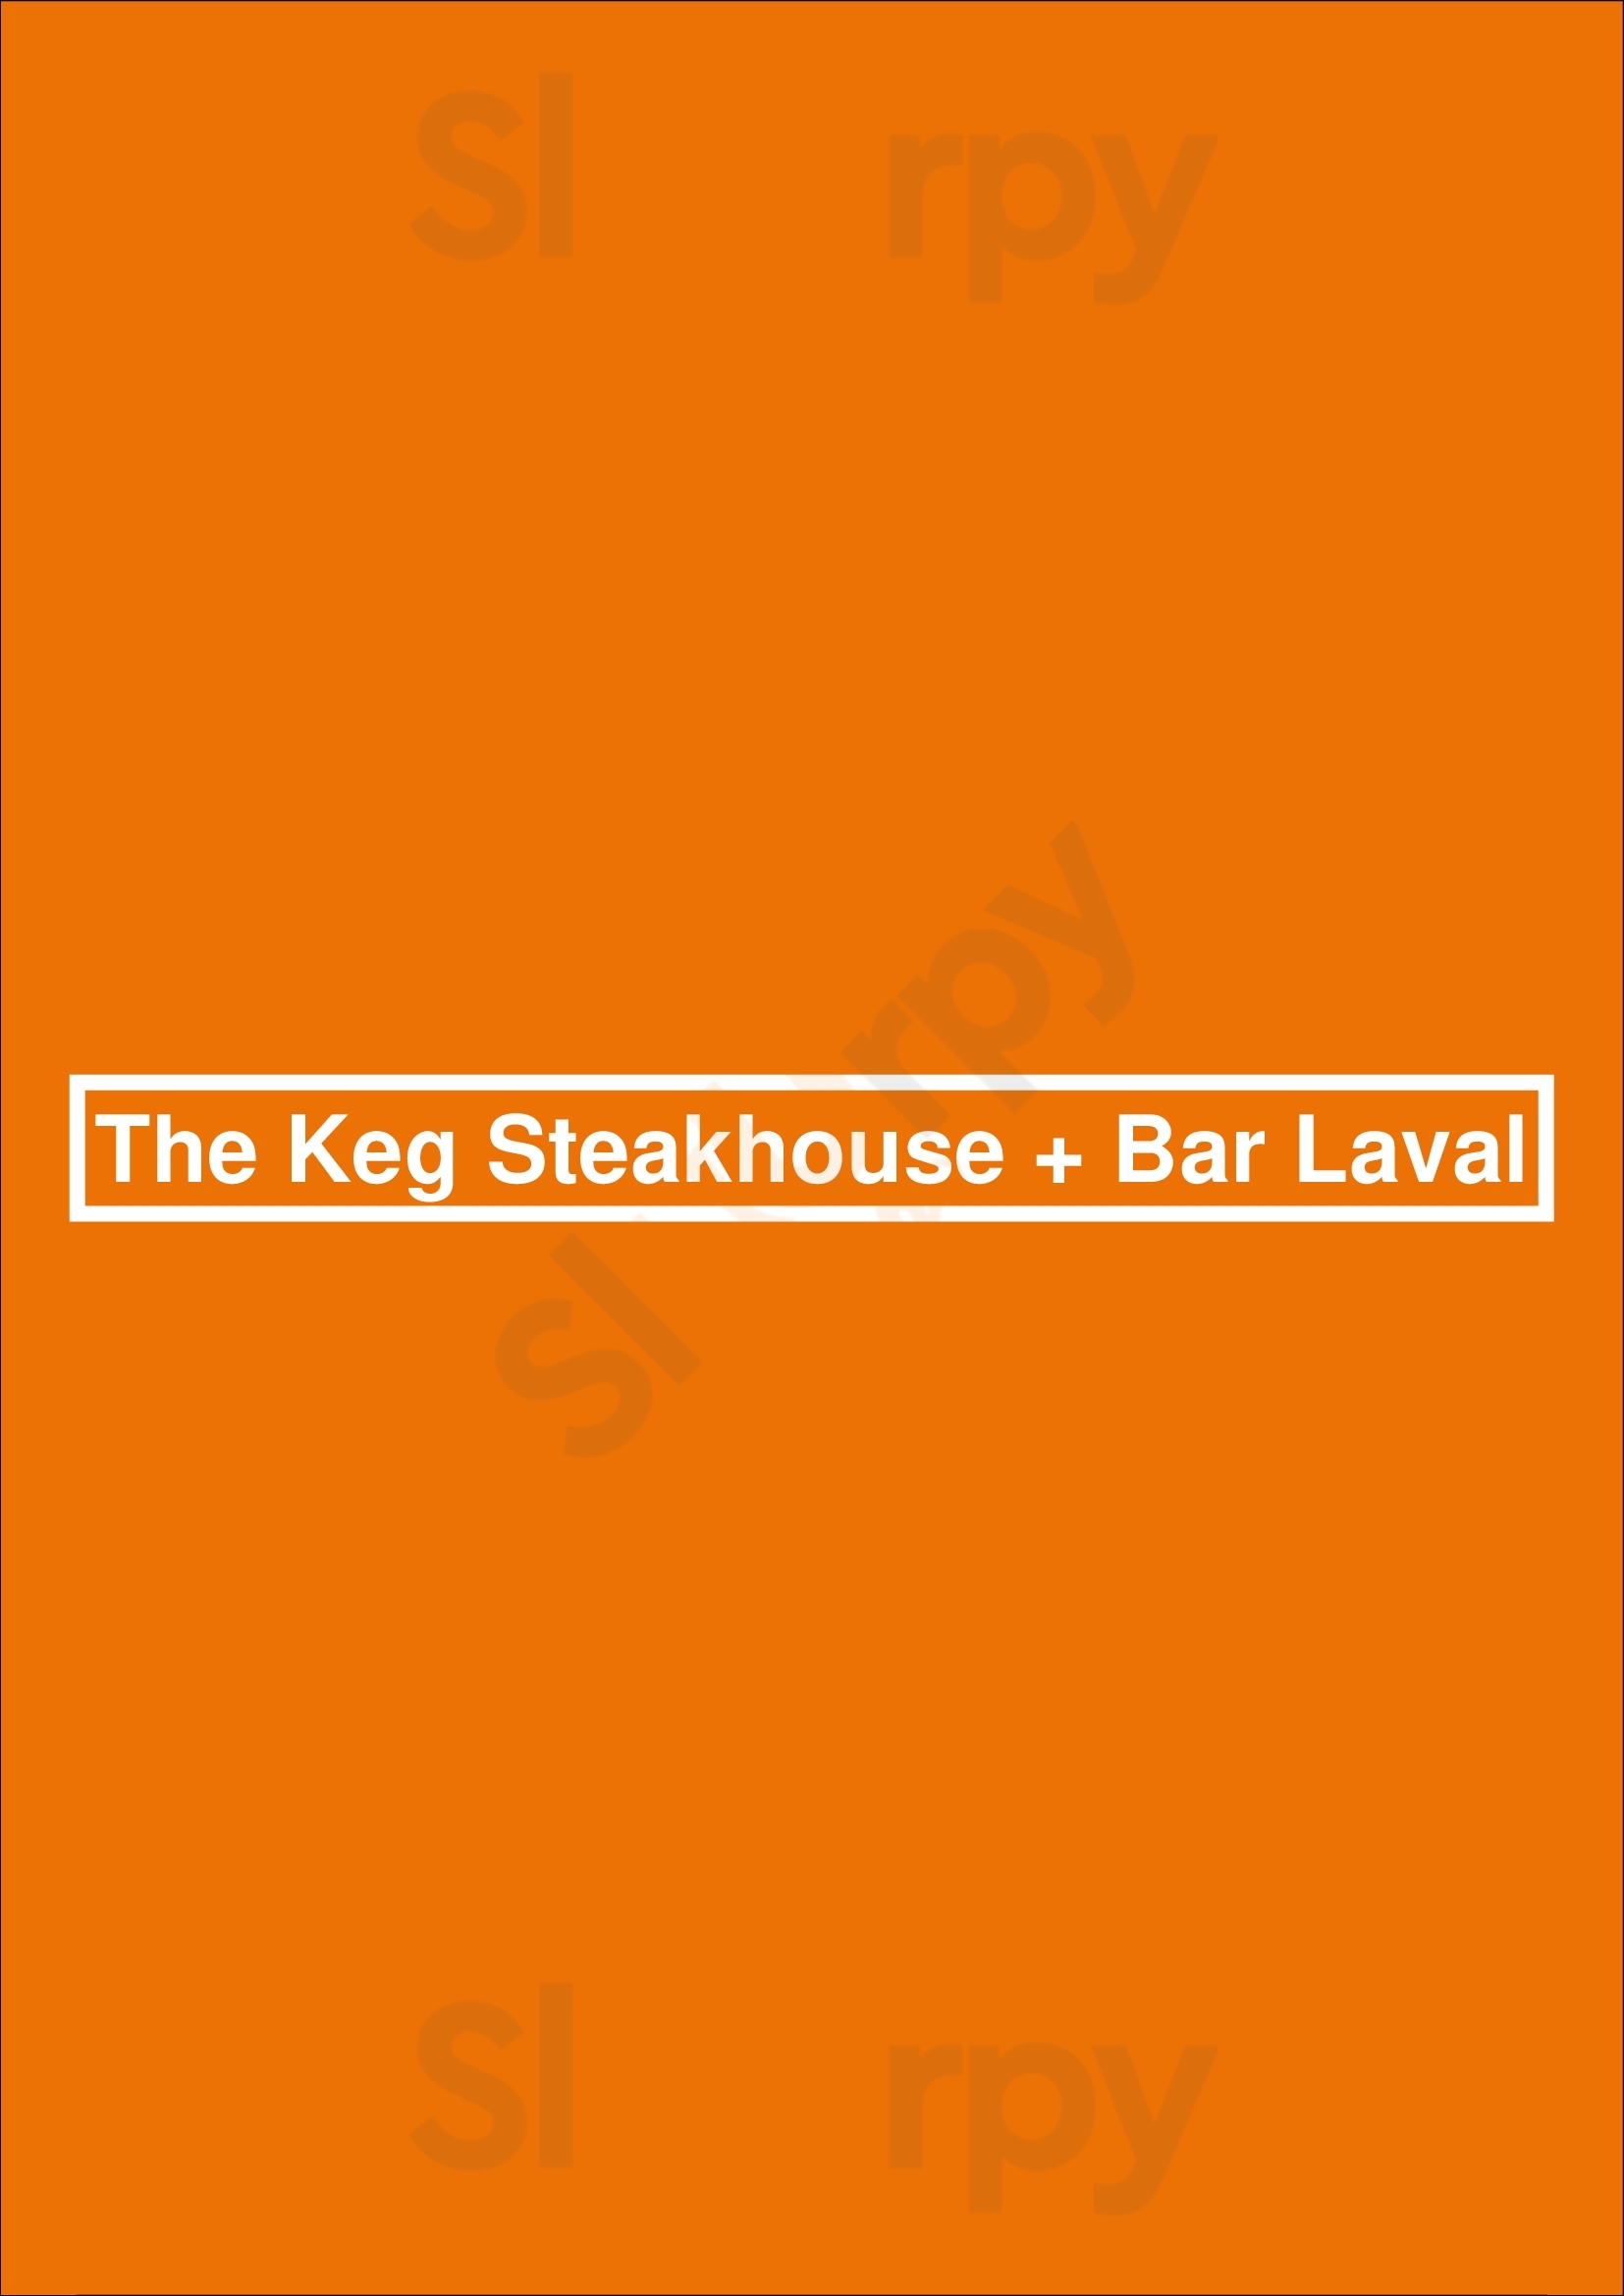 The Keg Steakhouse + Bar - Laval Laval Menu - 1